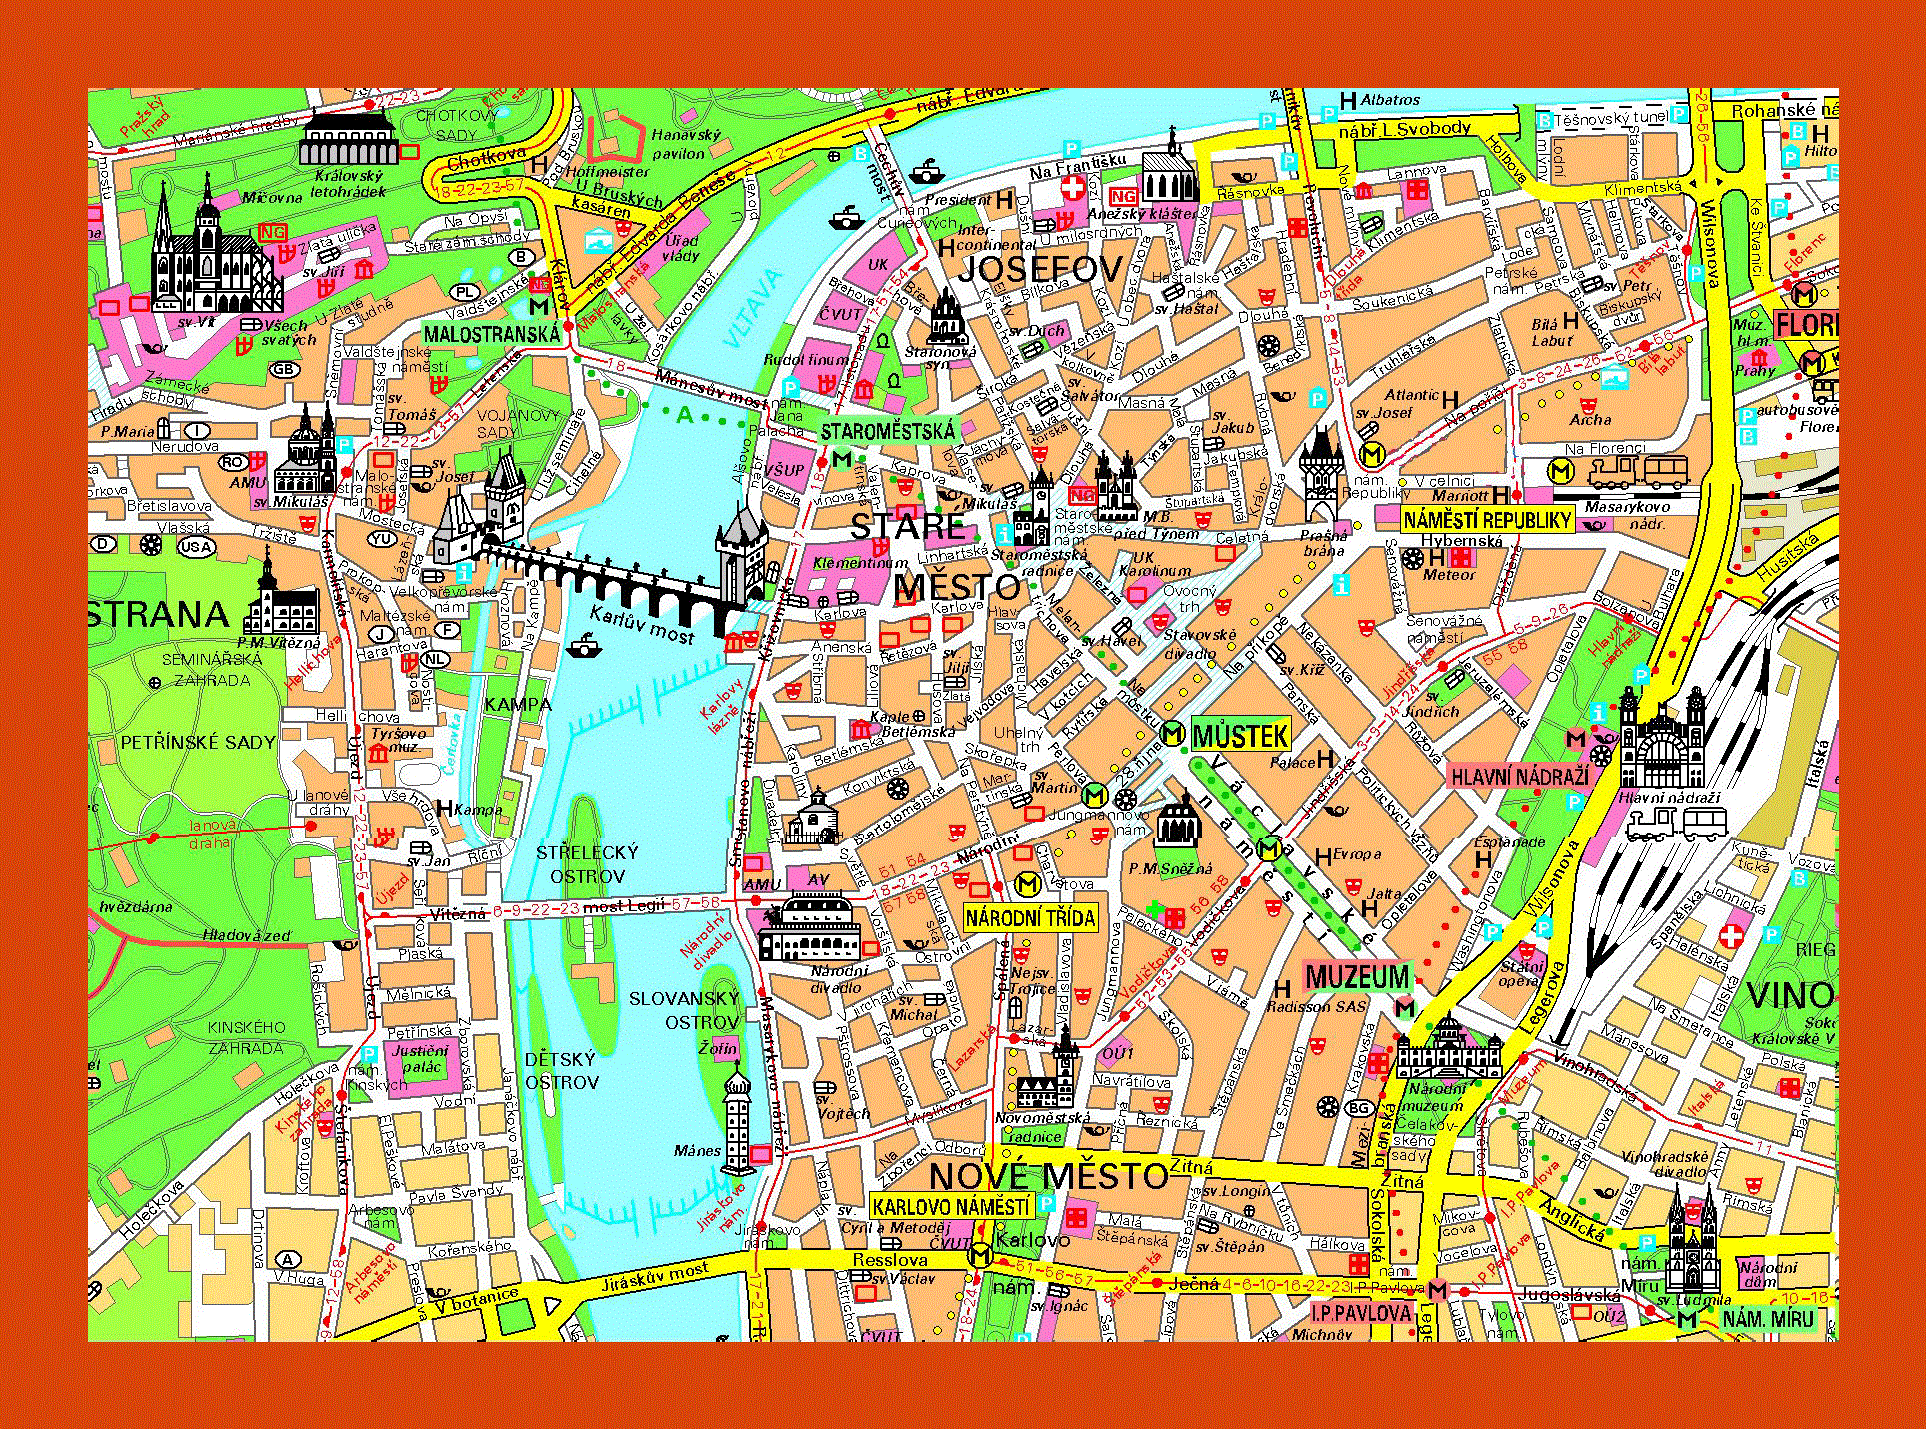 Tourist Map Of Prague City Center Maps Of Prague Maps Of Czech Republic Maps Of Europe Gif Map Maps Of The World In Gif Format Maps Of The Whole World